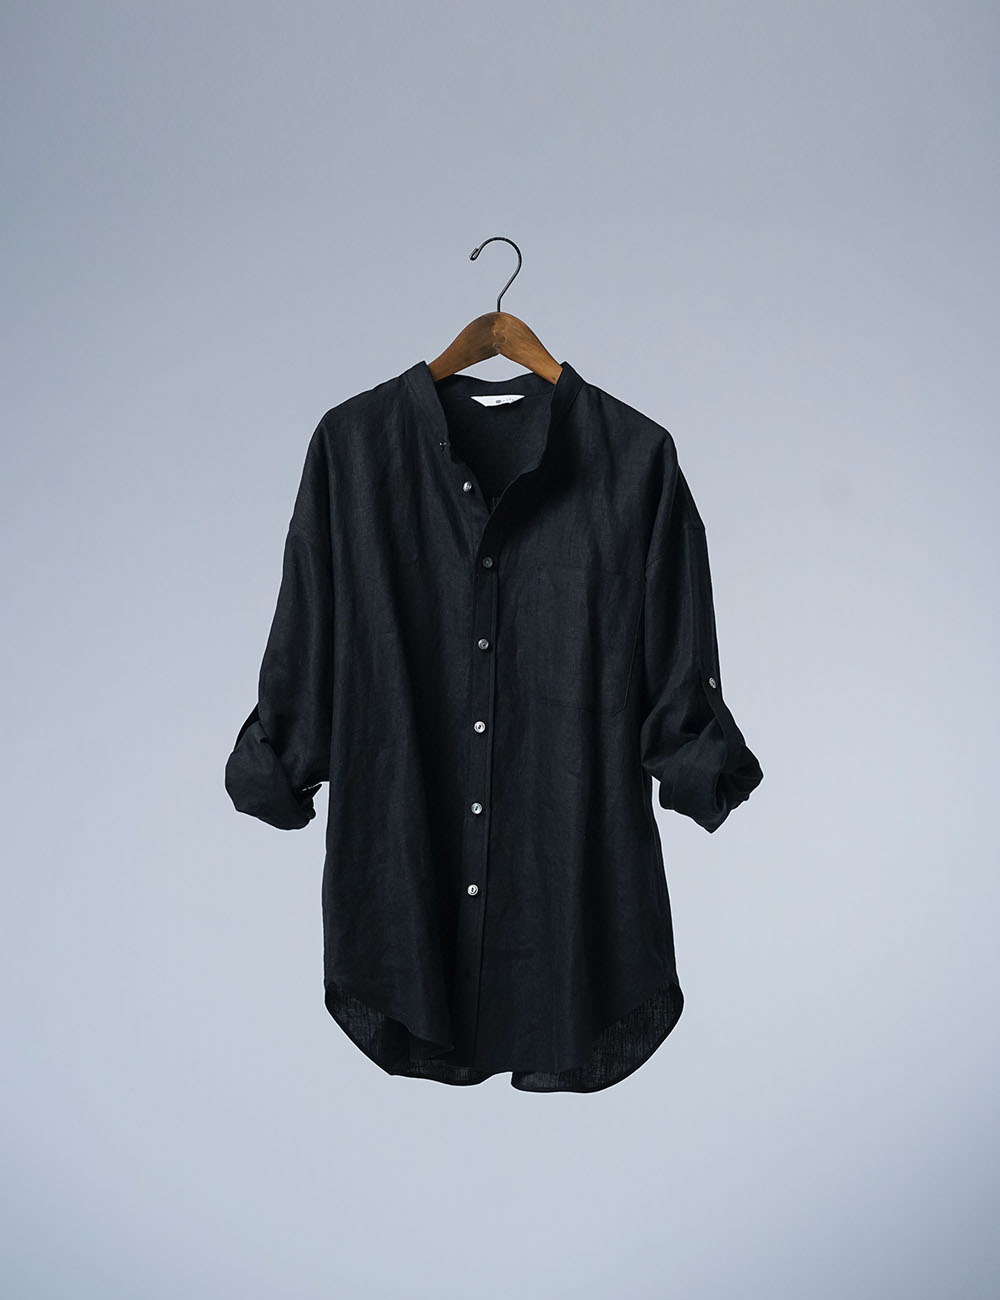 【wafu】Linen Shirt　スタンドカラー ロールアップシャツ / 黒 t021f-bck1